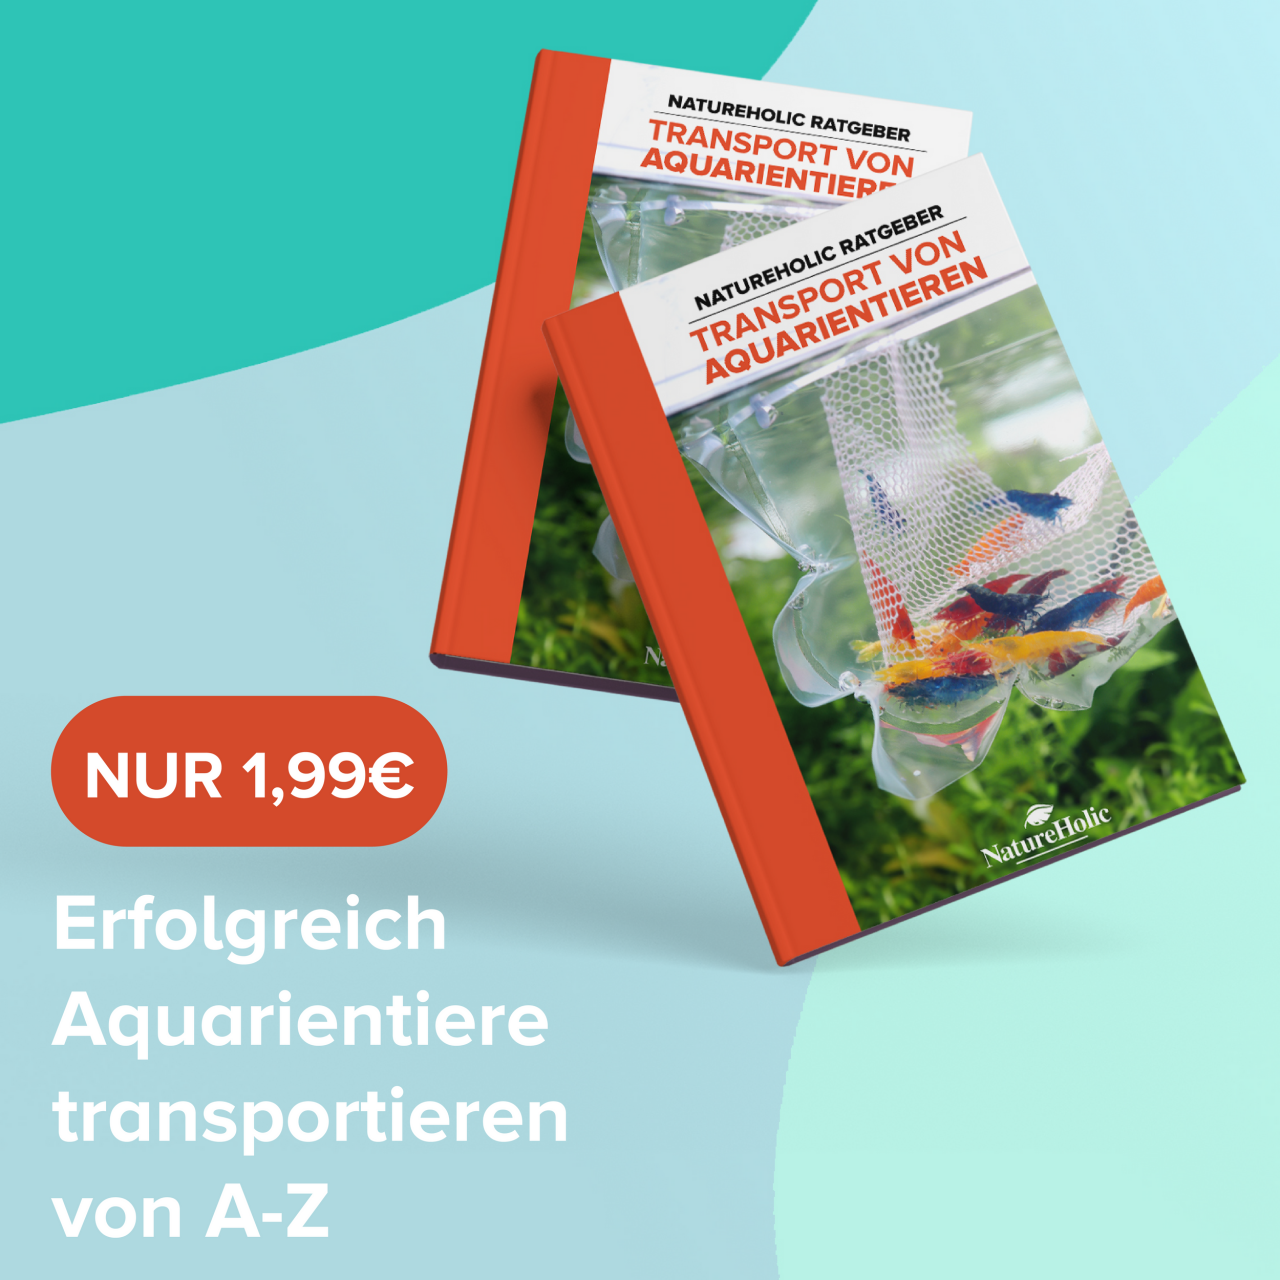 Natureholic Ratgeber - Transport von Aquarientieren - Ebook